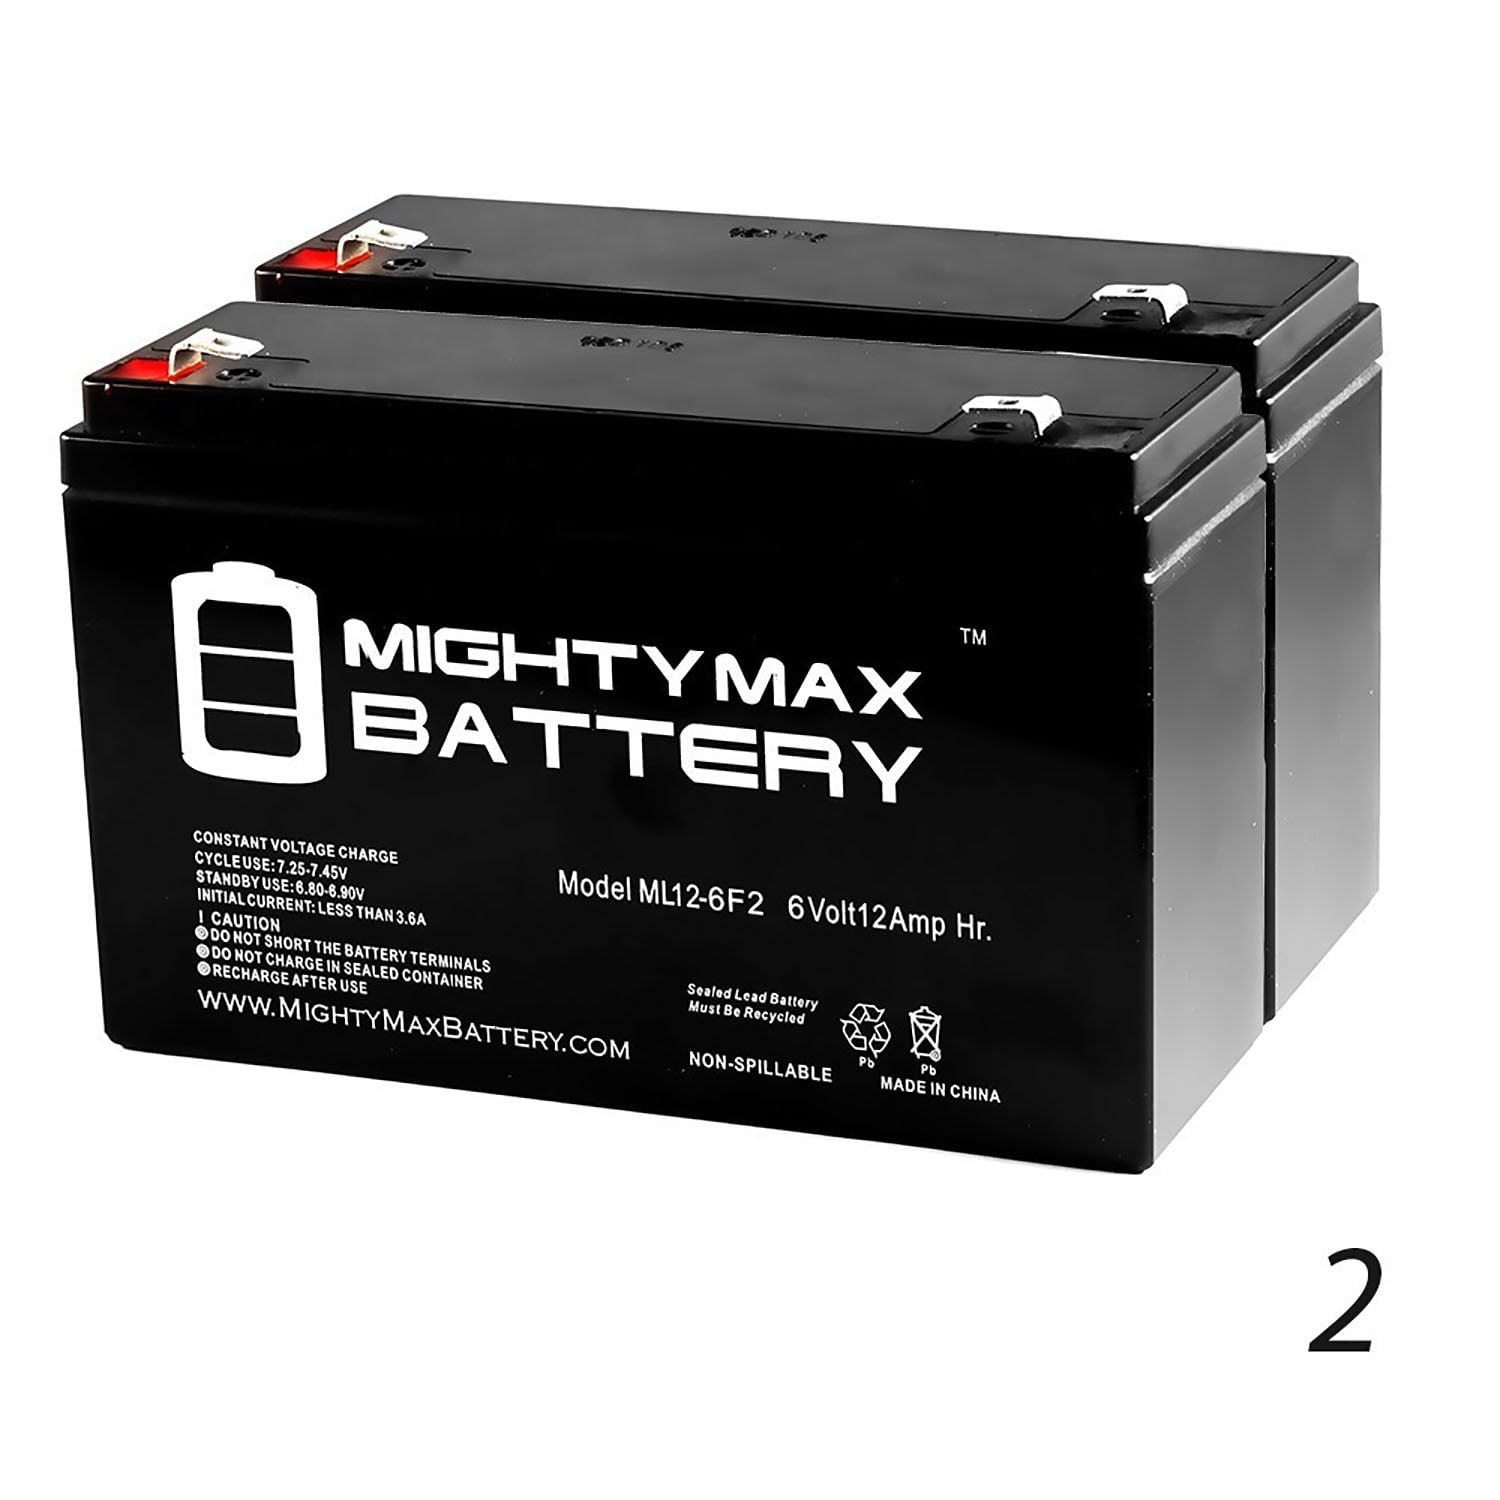 More batteries